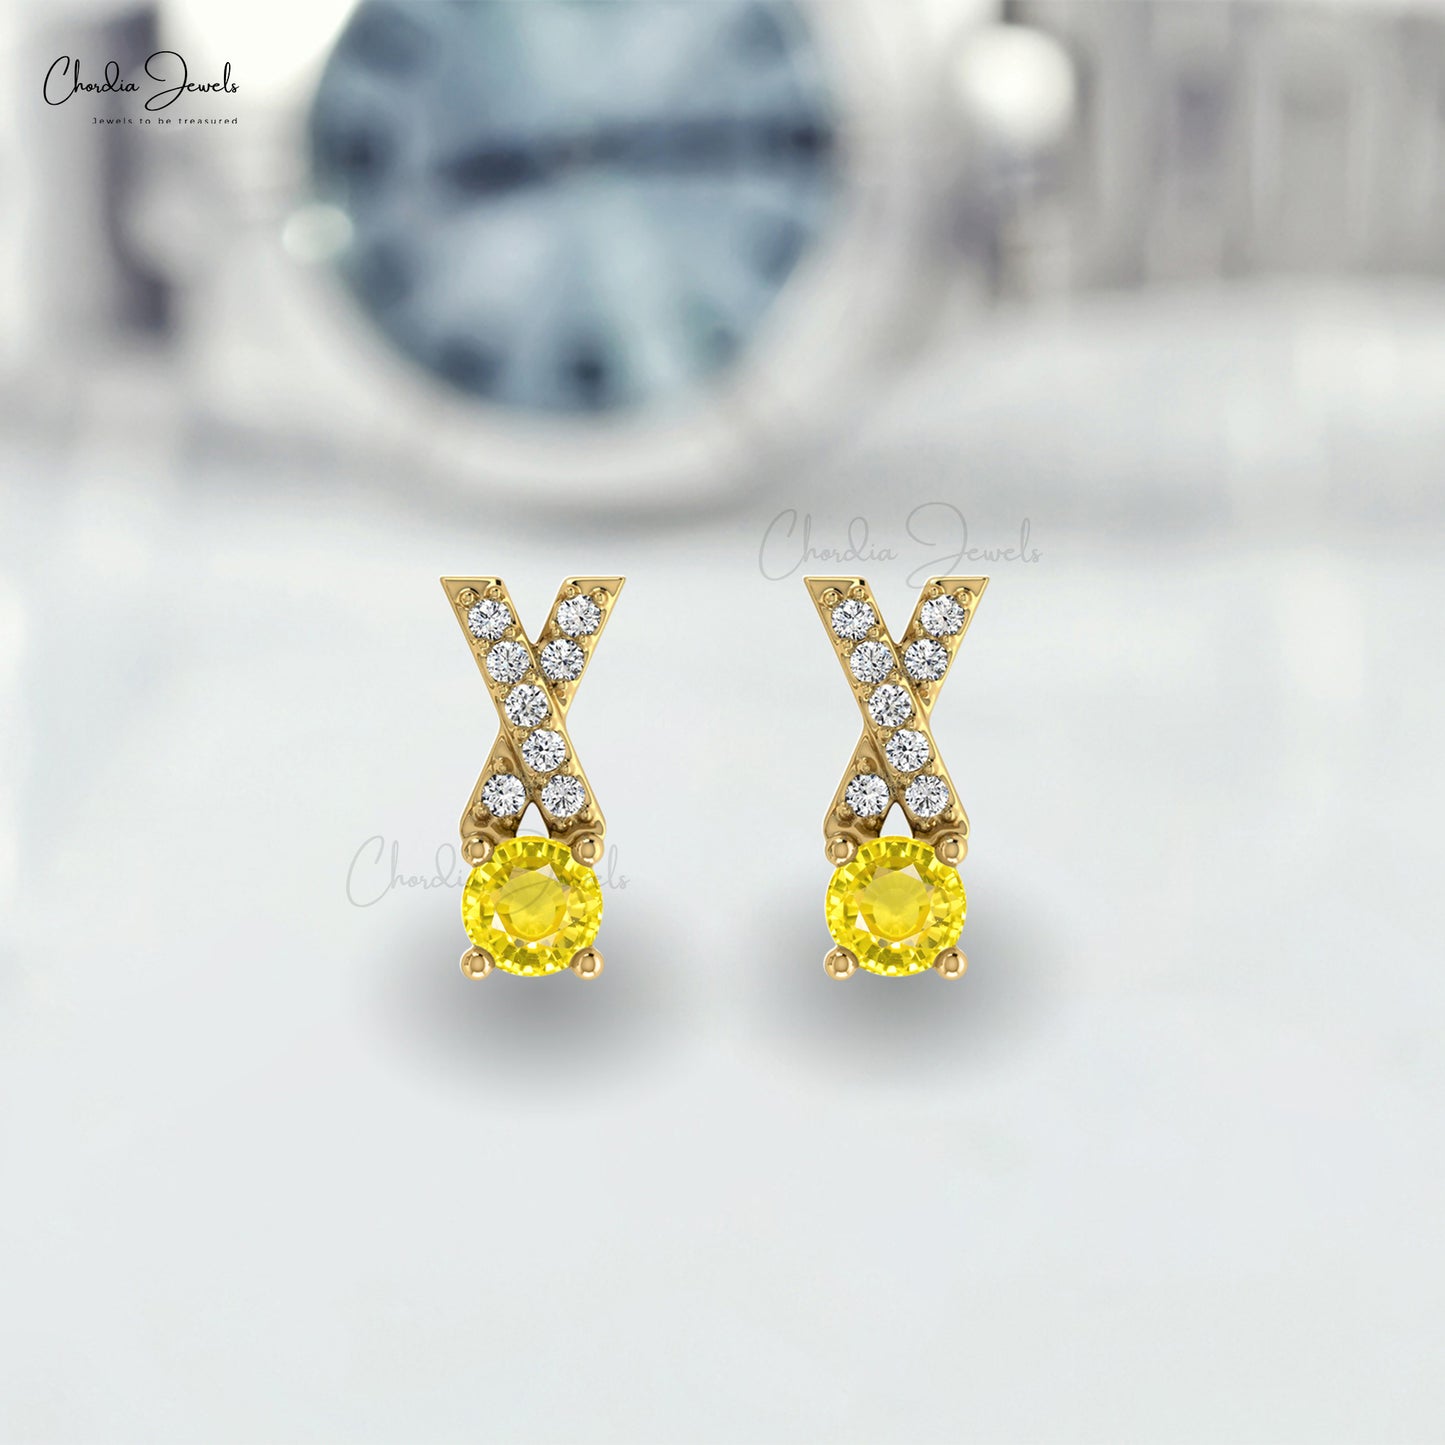 Natural Yellow Sapphire Criss Cross Handmade Studs Earring 14k Solid Gold White Diamond Earring 5mm Round Cut Gemstone Earring For Women's